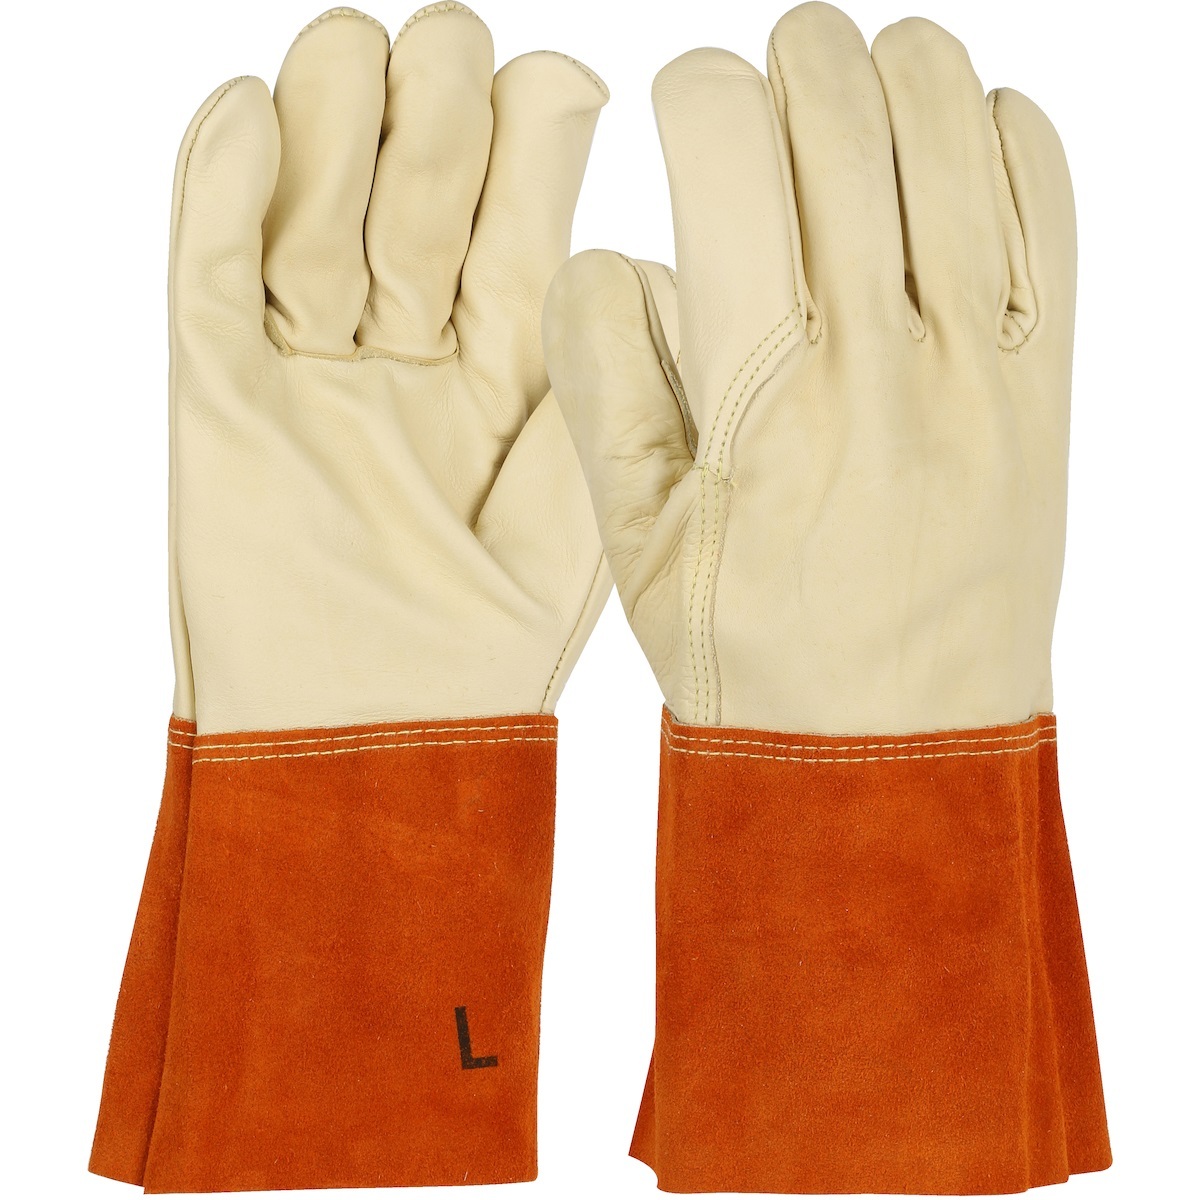 Select Shoulder Split Cow Gloves Blue/Gray Large 12 Pairs